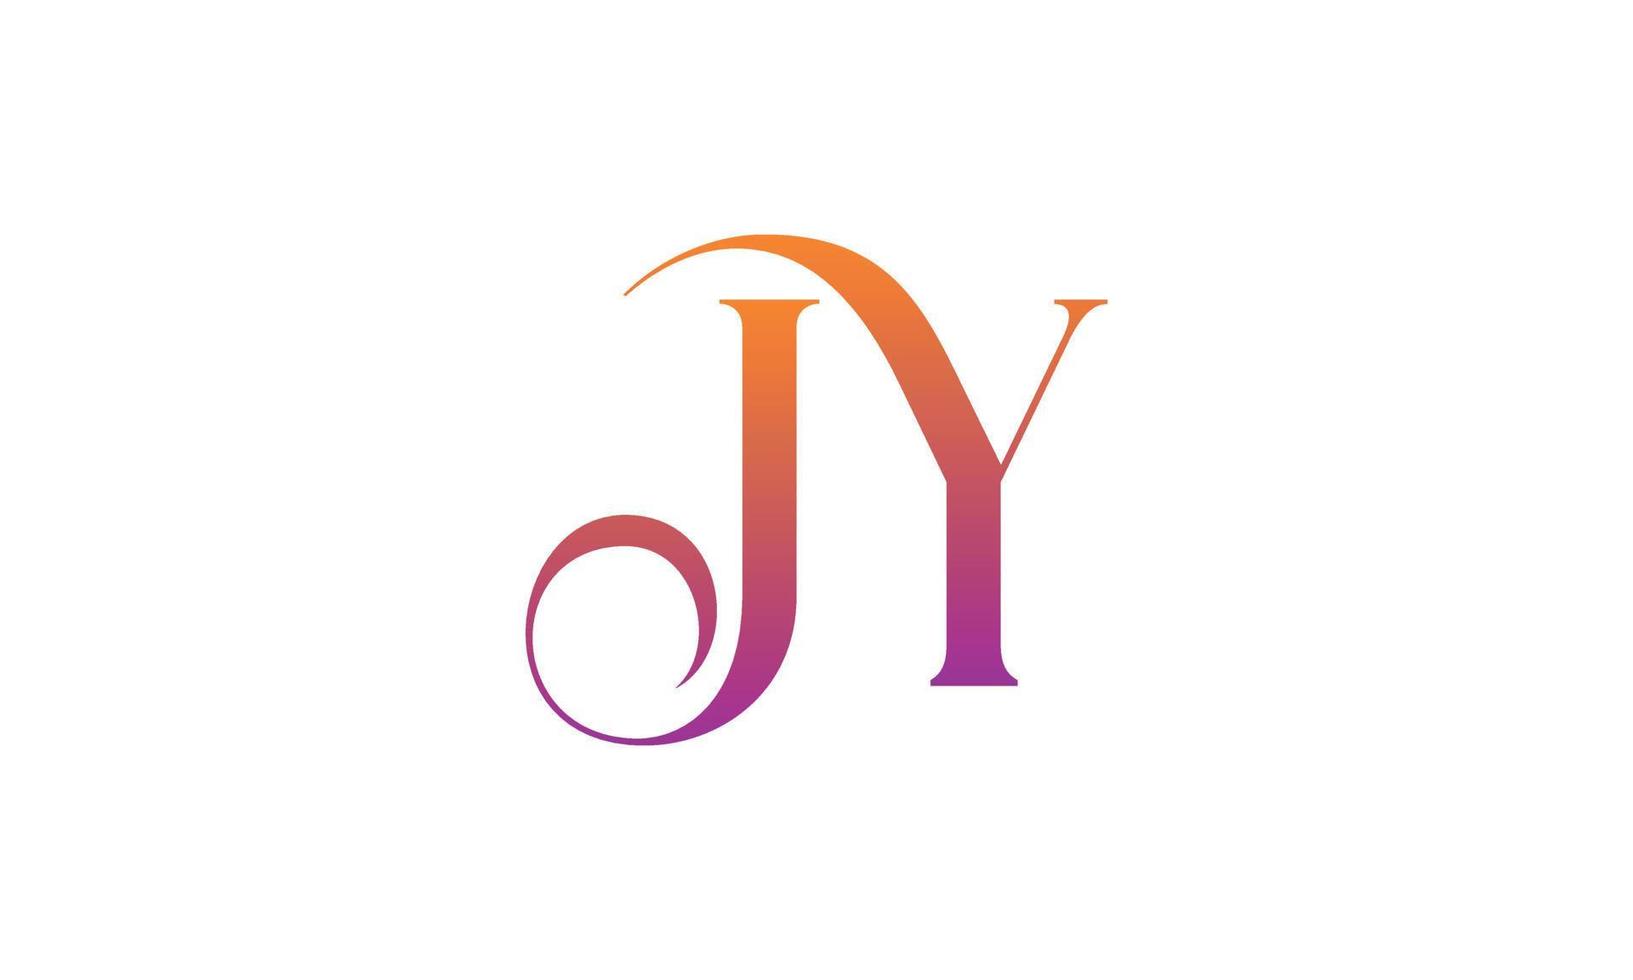 carta jy vector logo plantilla gratis vector gratis